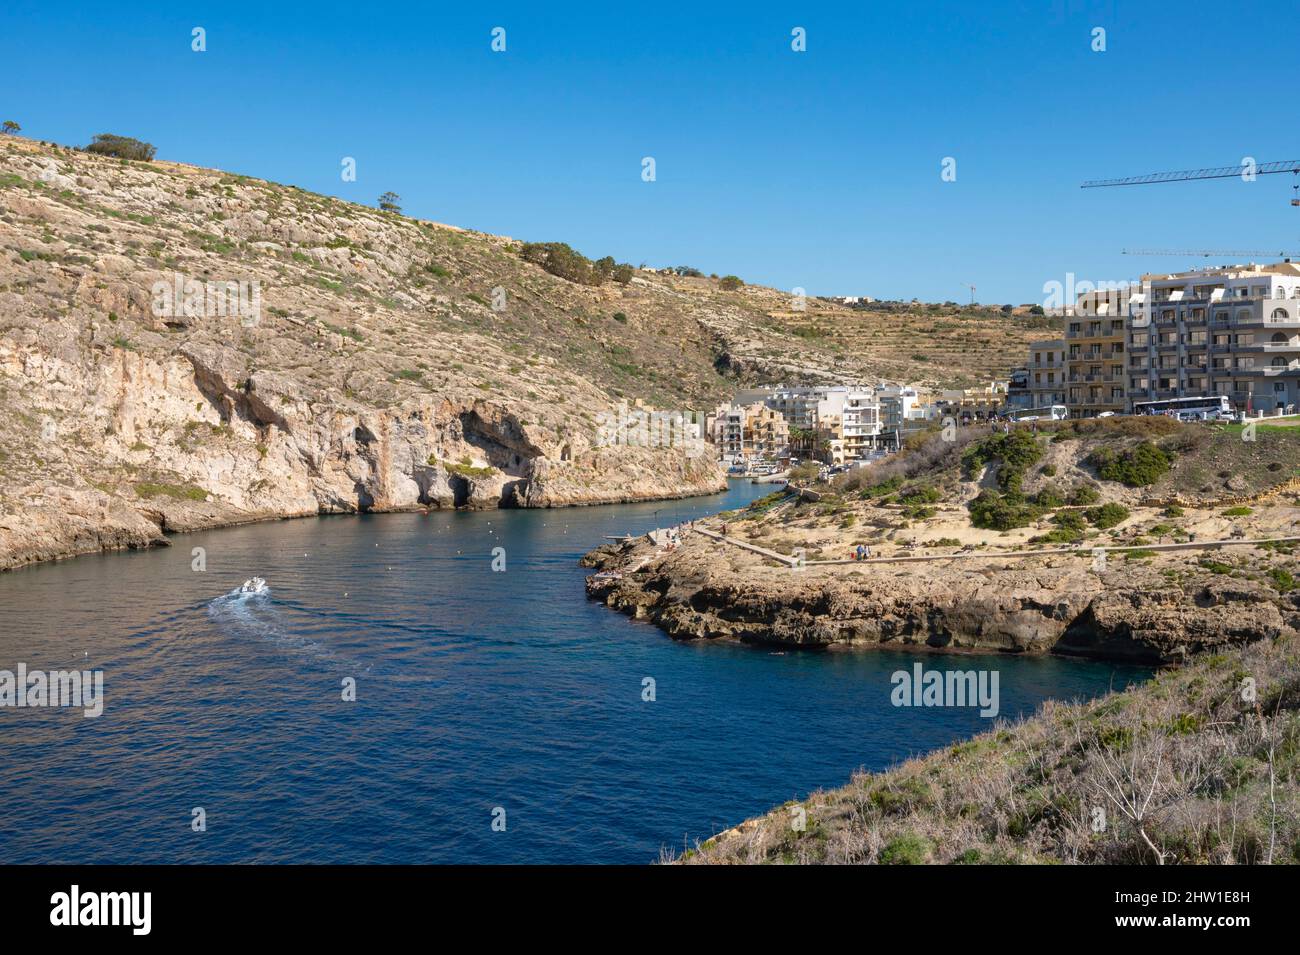 Malta, Gozo island, entrance to the Bay of Xlendi Stock Photo